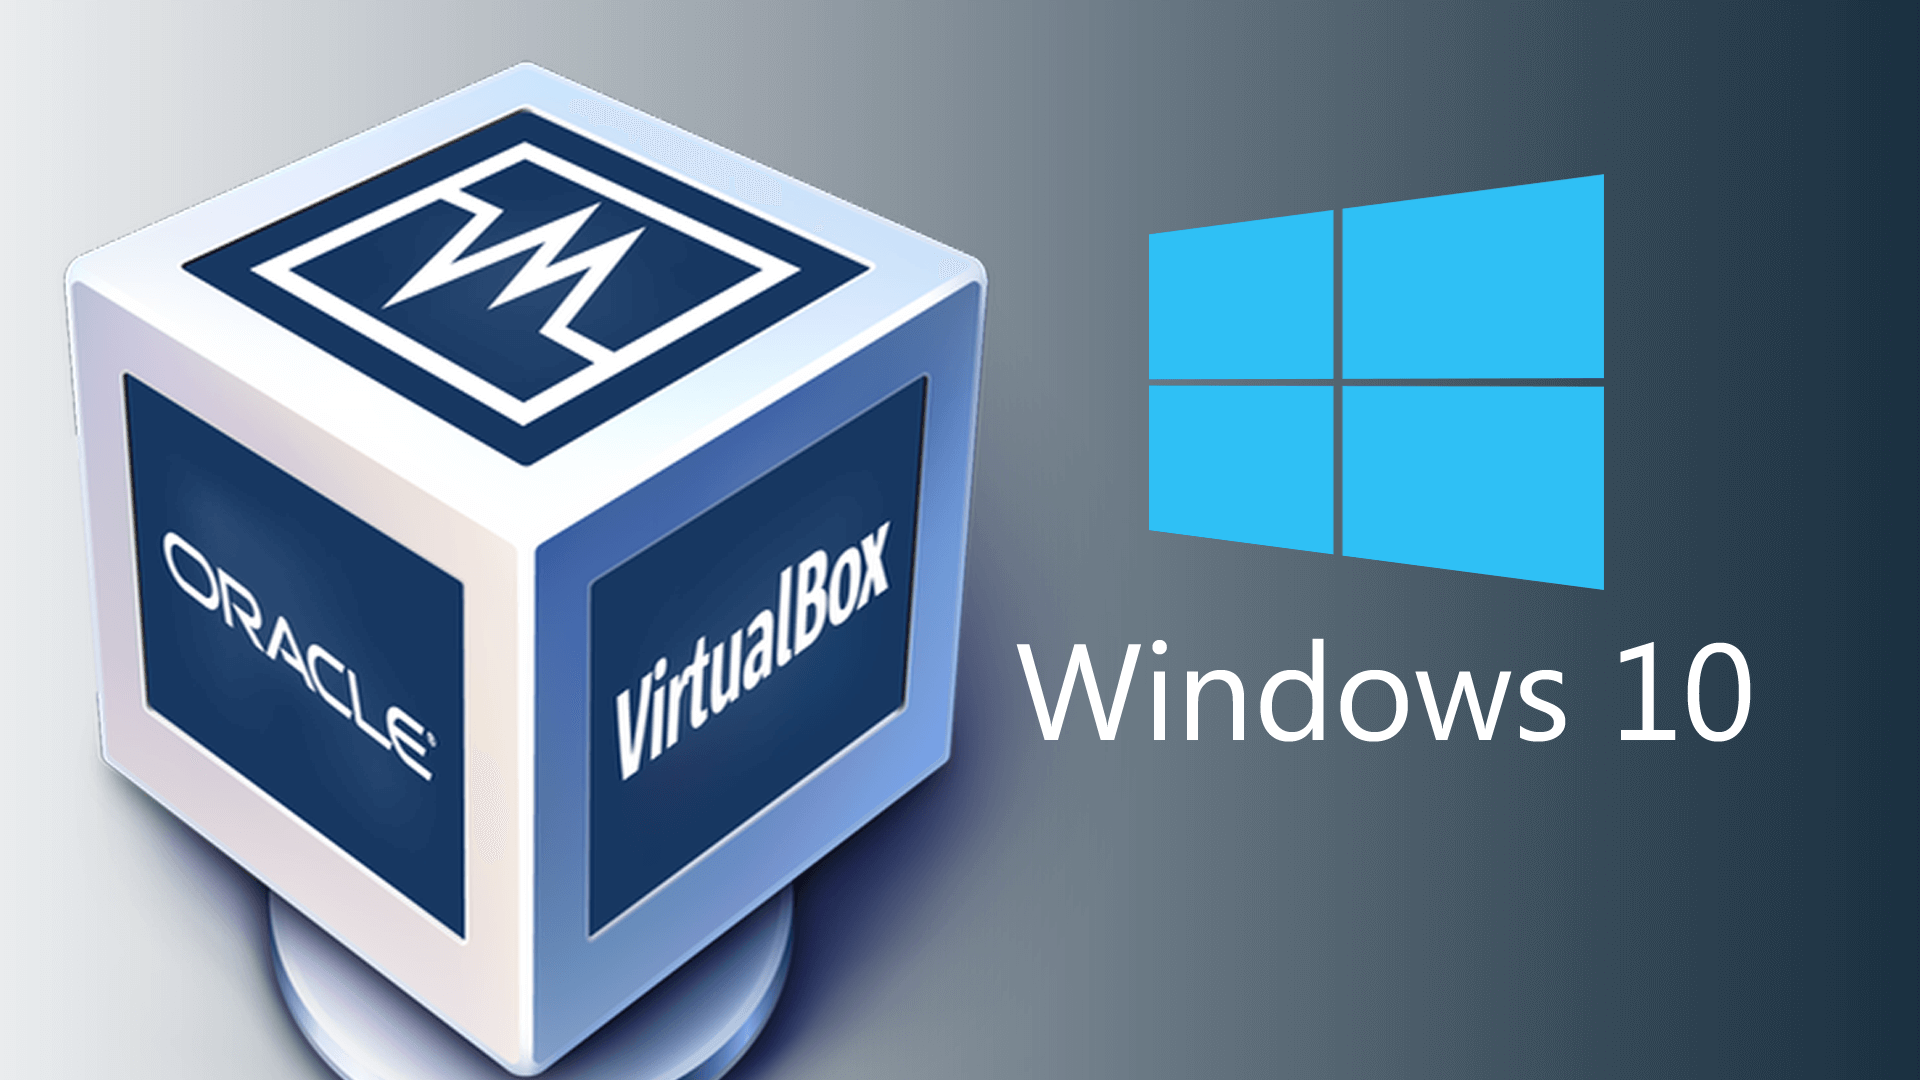 windows 10 virtualbox image